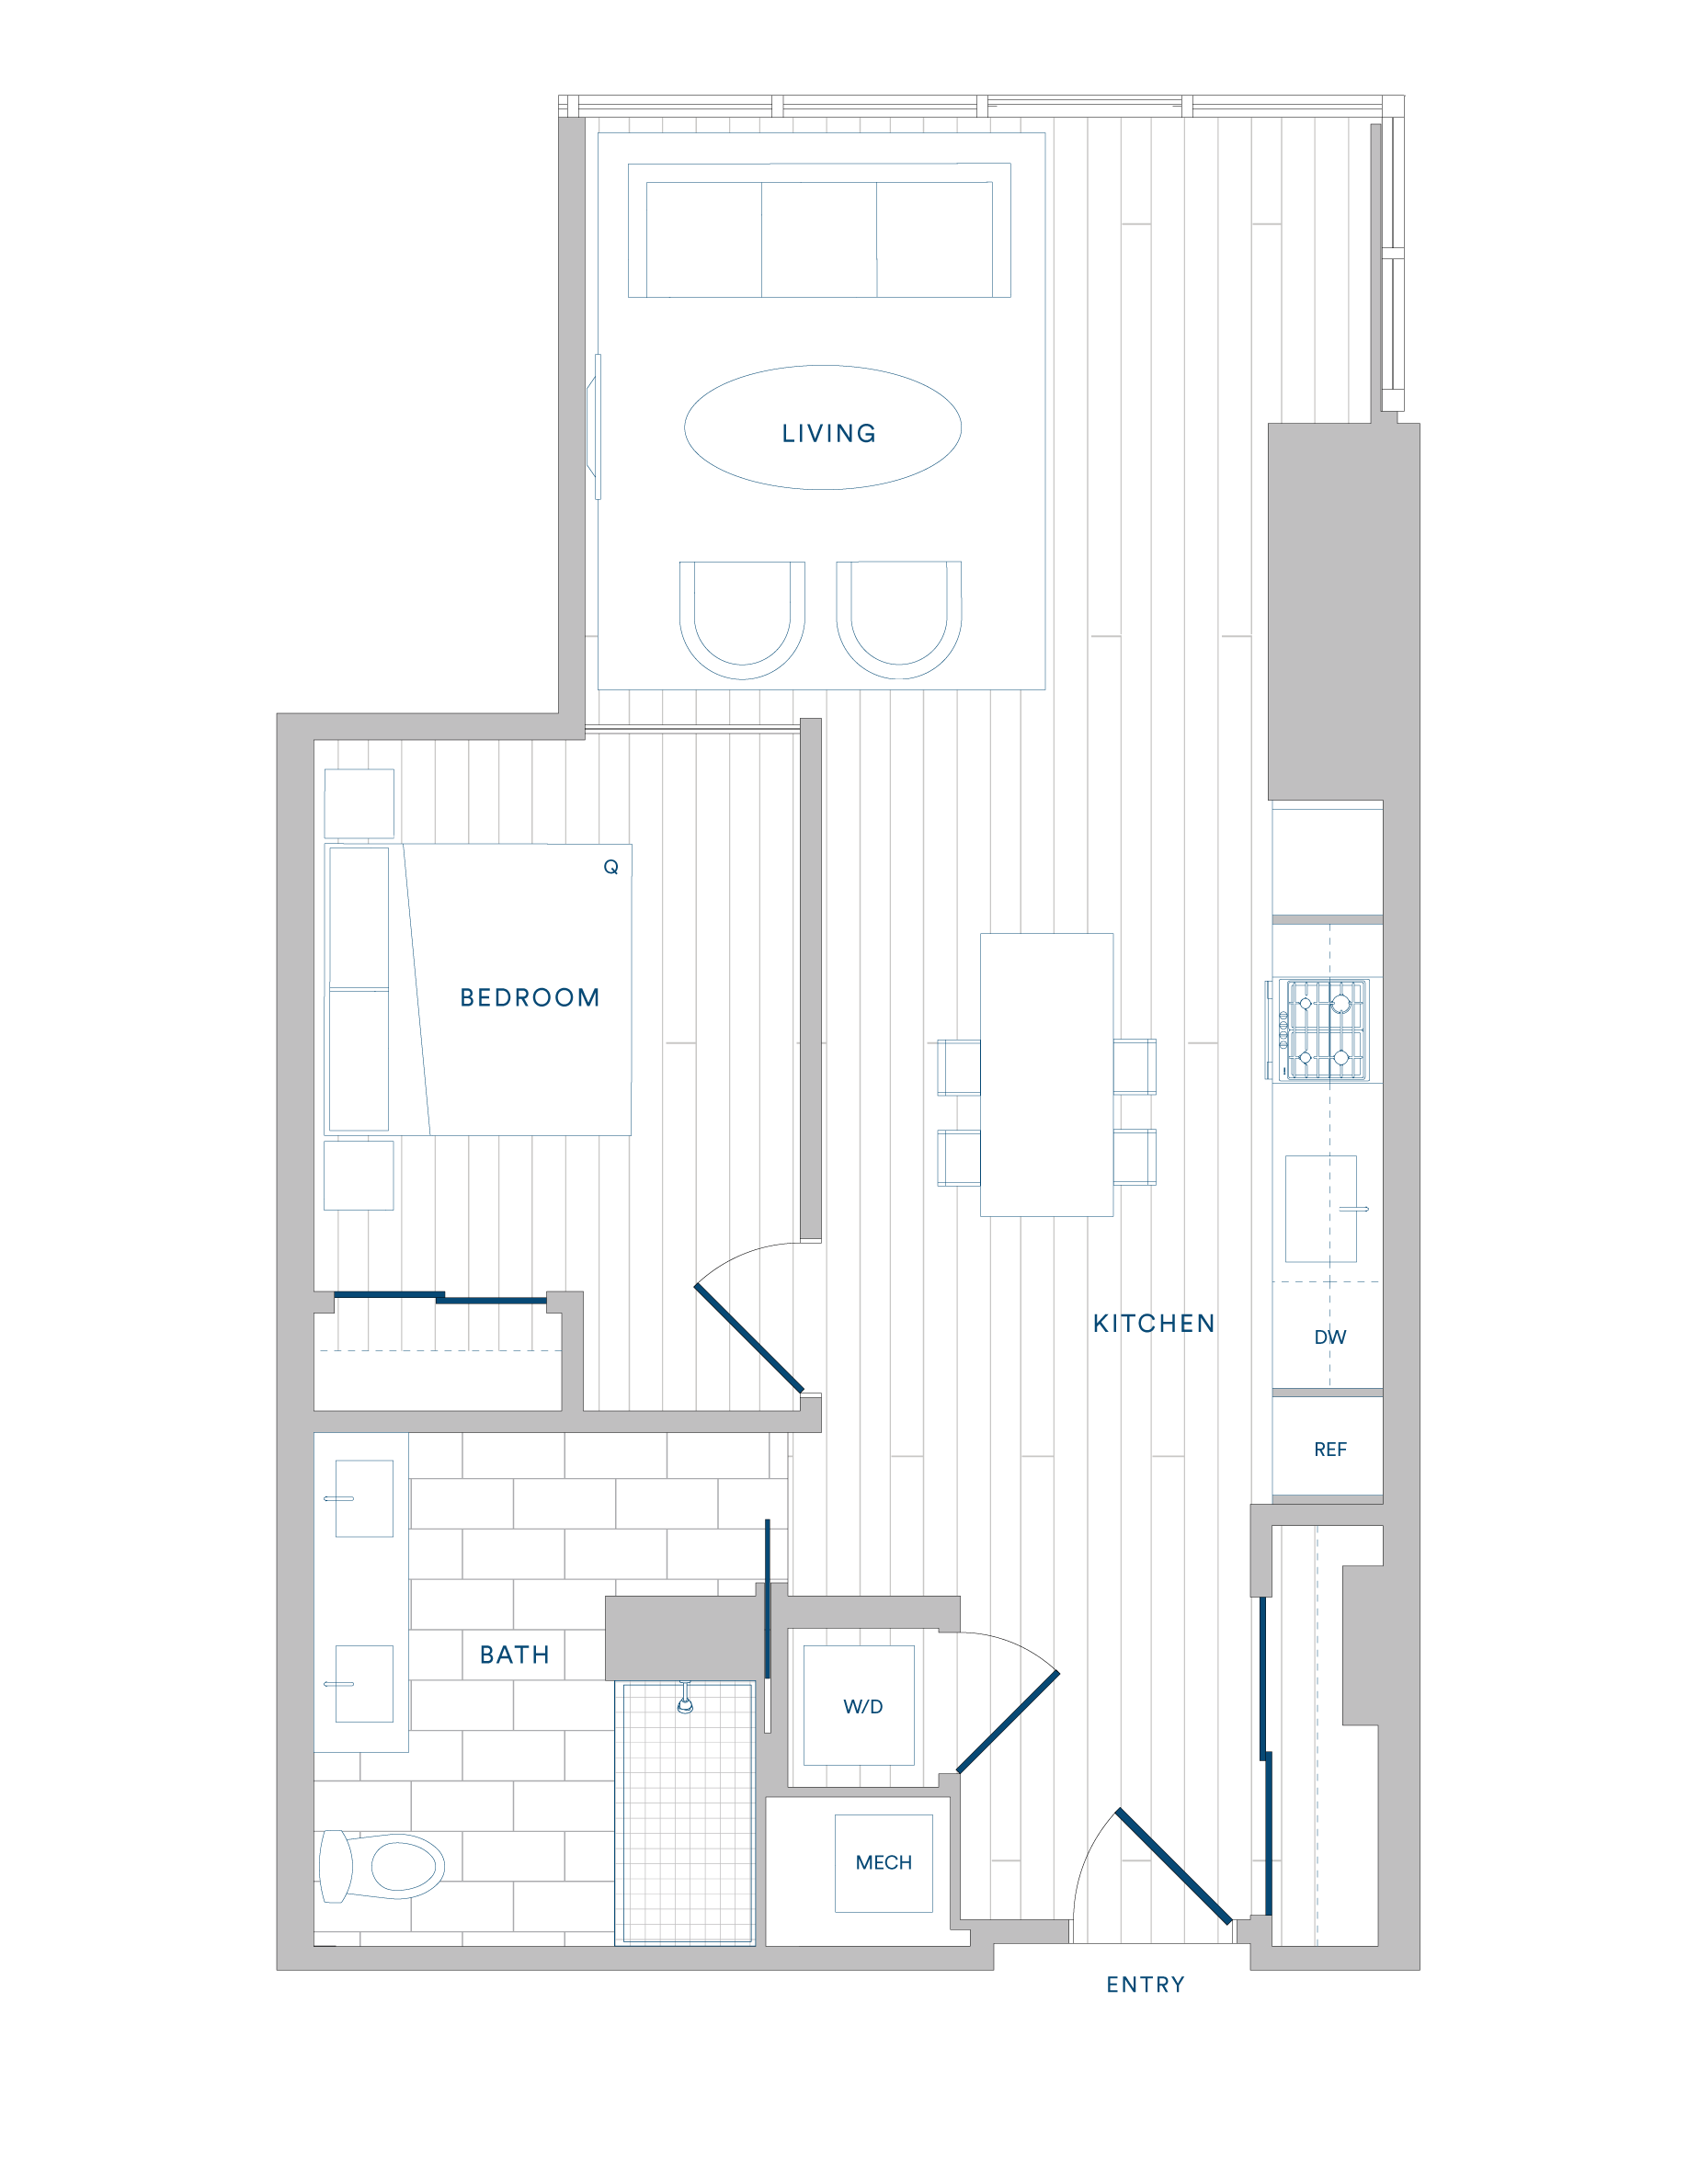 Floorplan for Apartment #319, 1 bedroom unit at Margarite